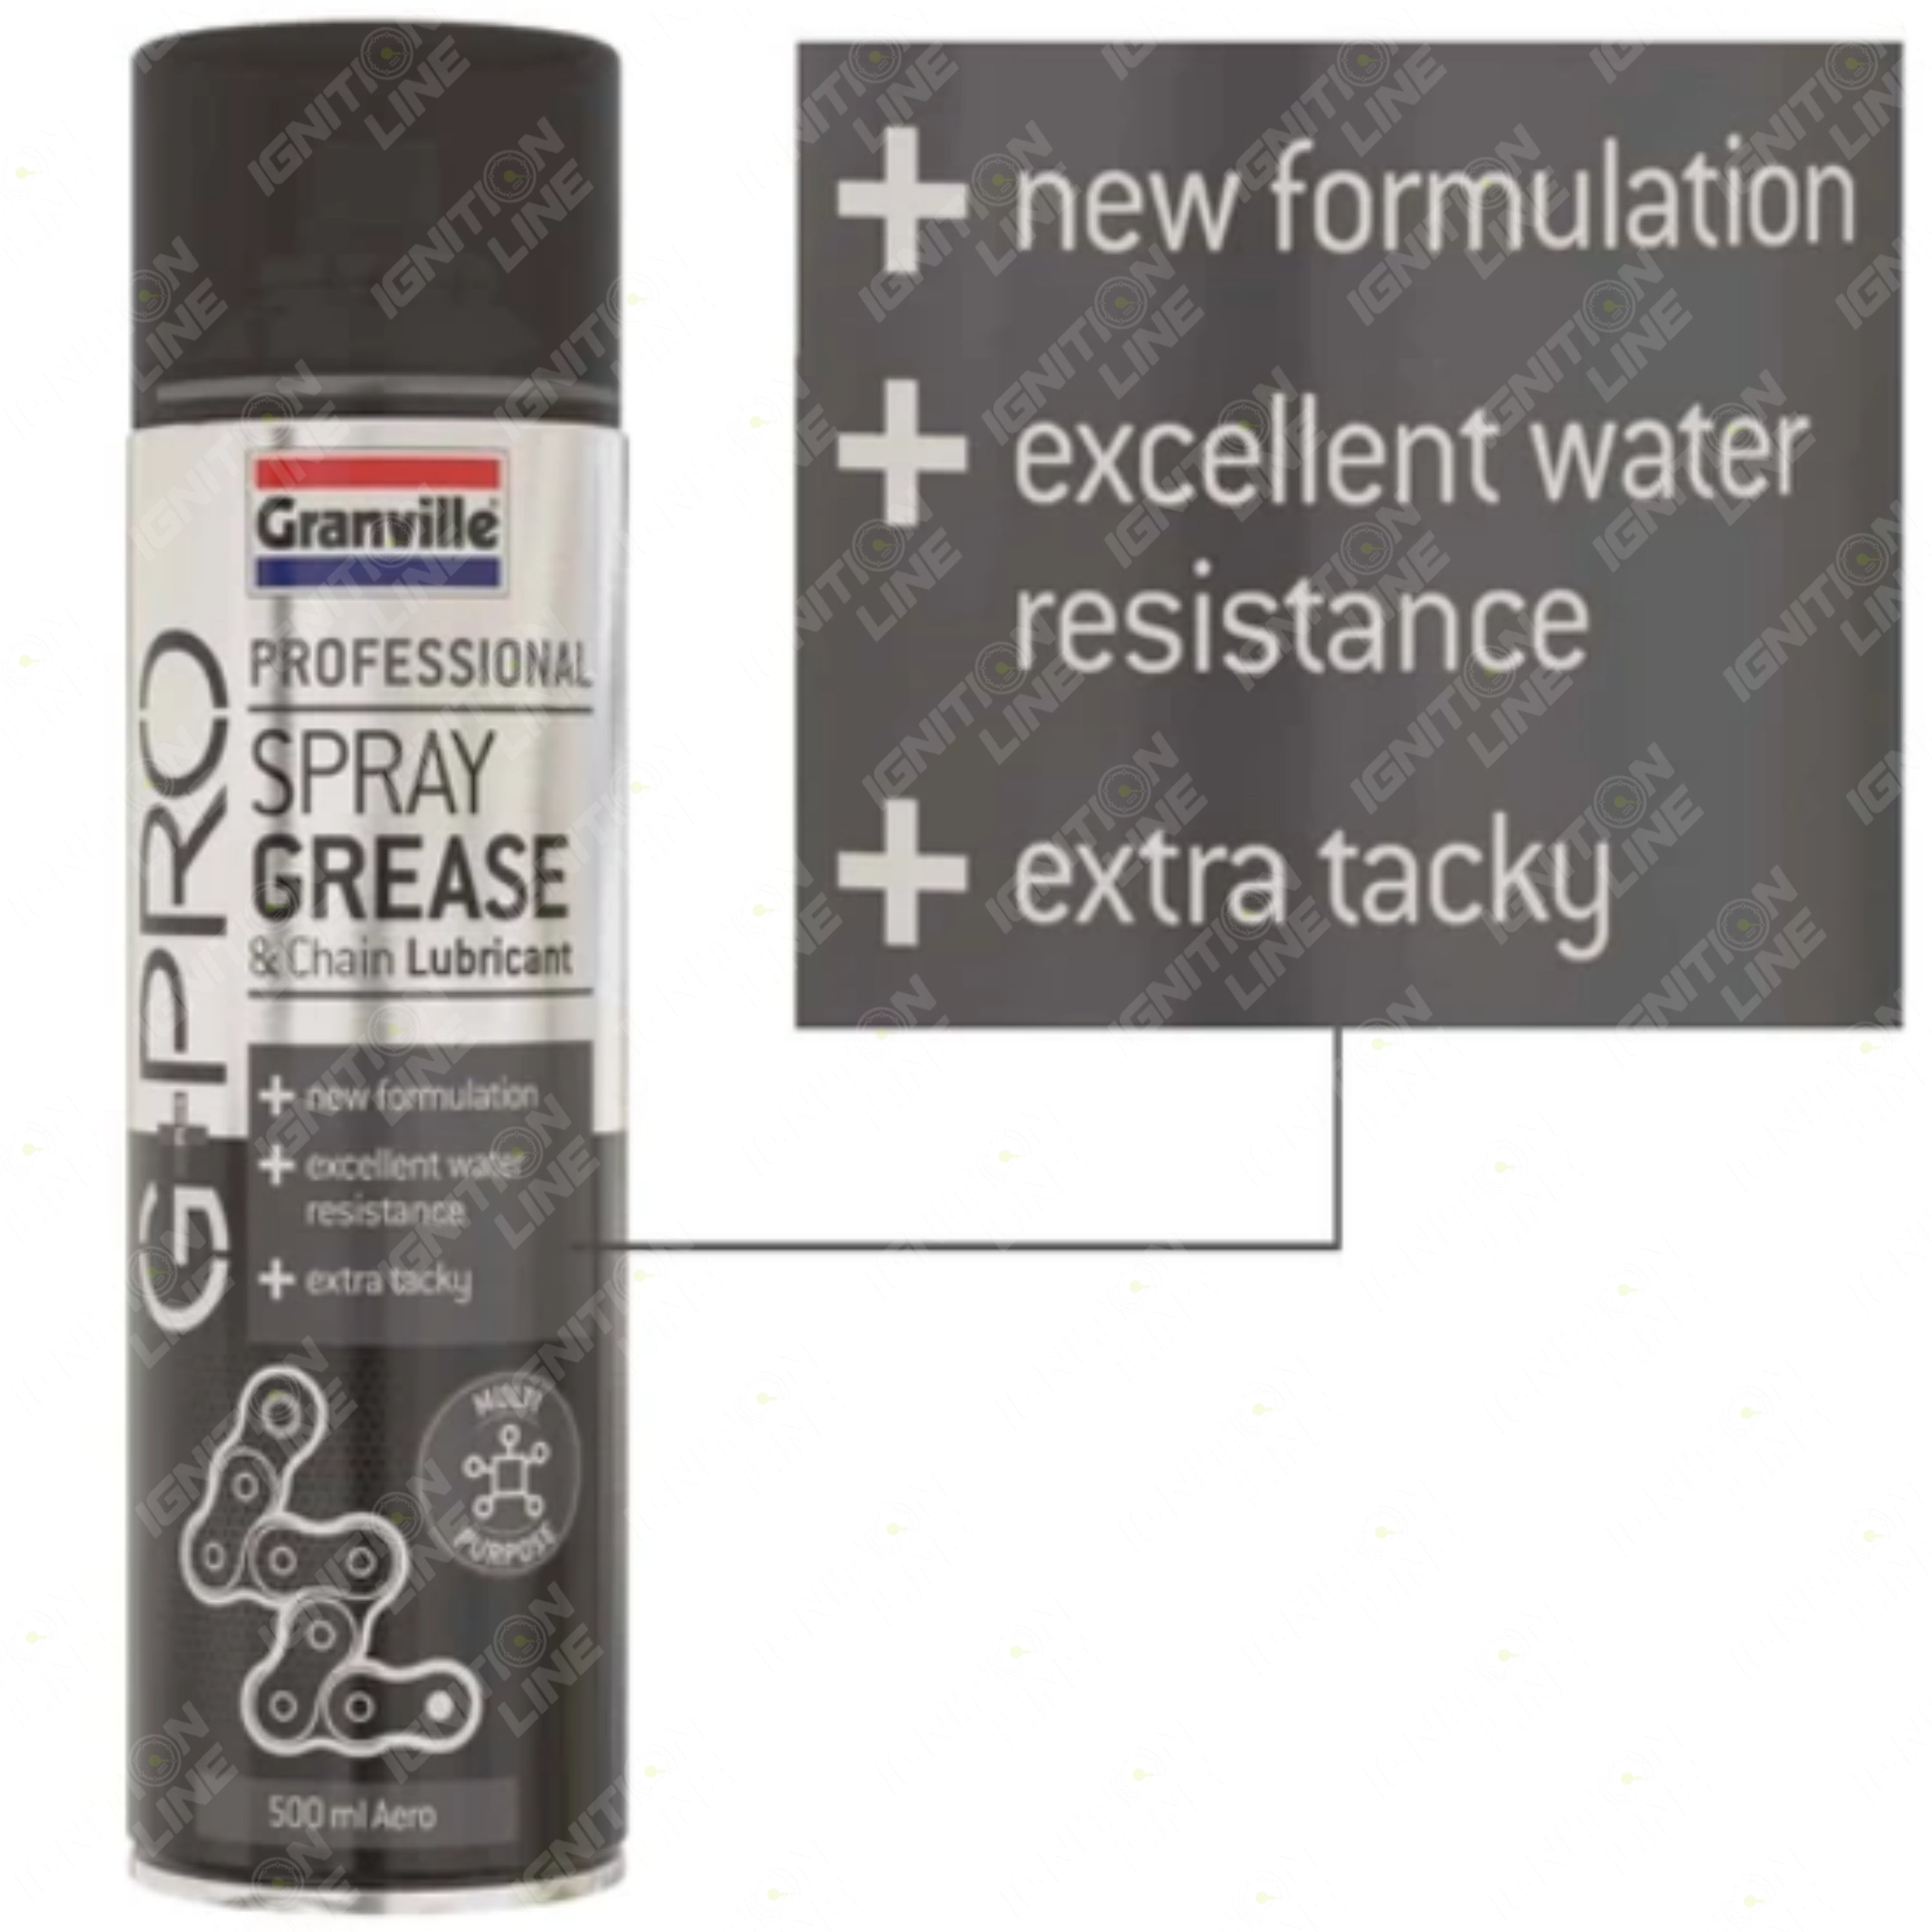 Granville G+Pro Spray Grease & Chain Lubricant 500ml